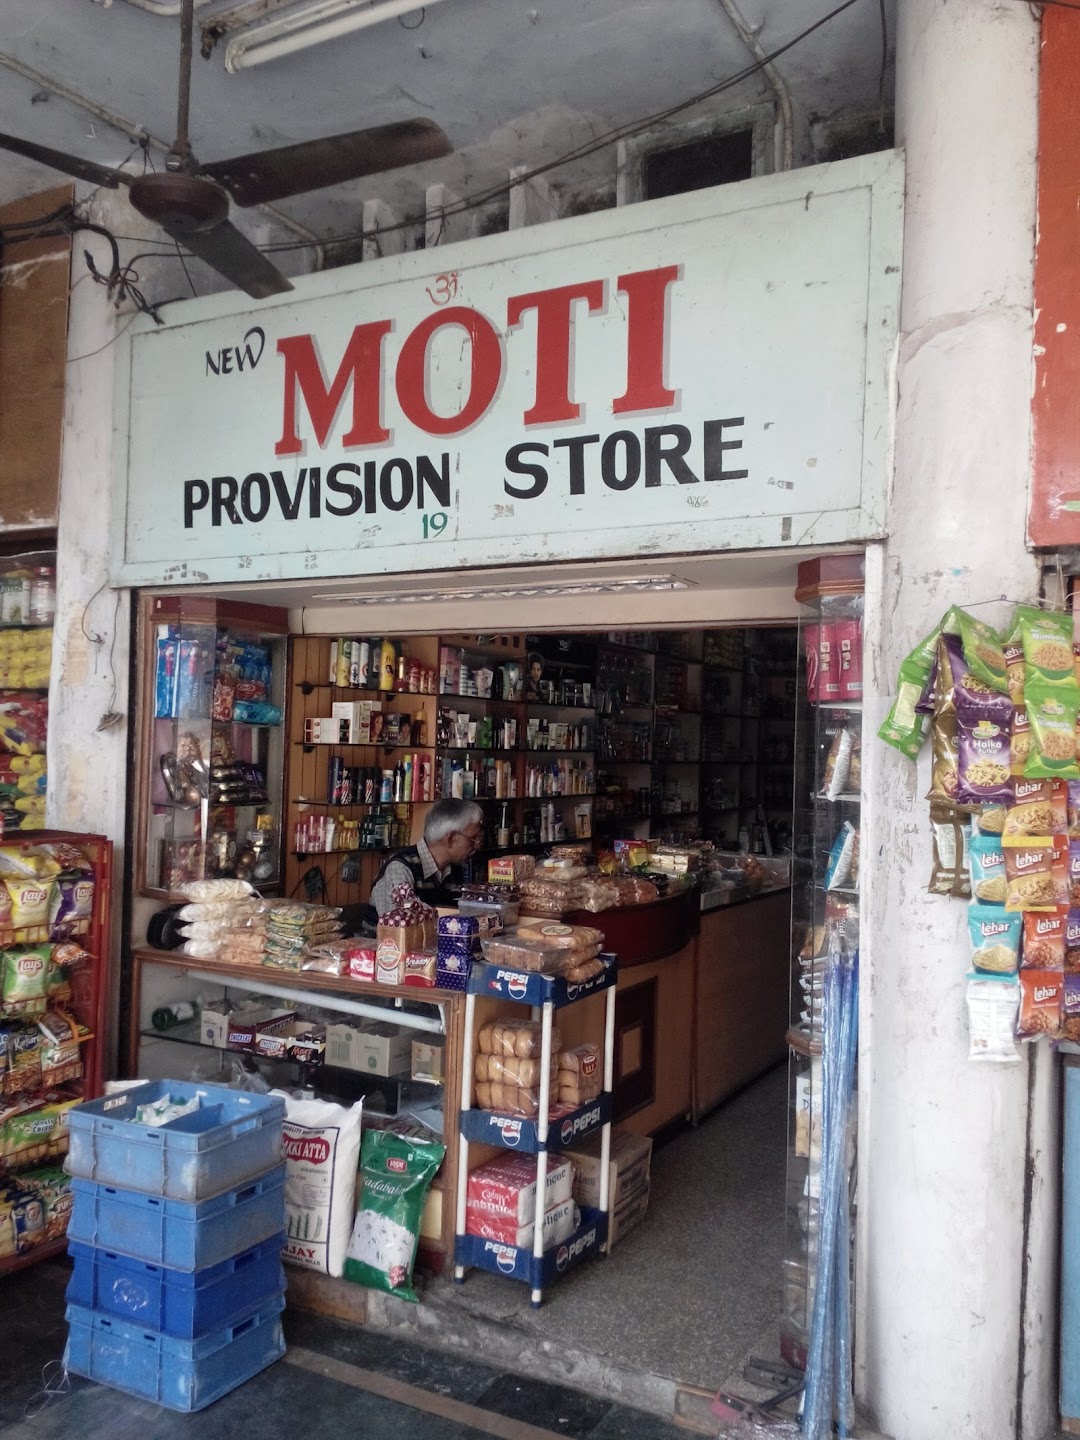 New Moti Provision Store